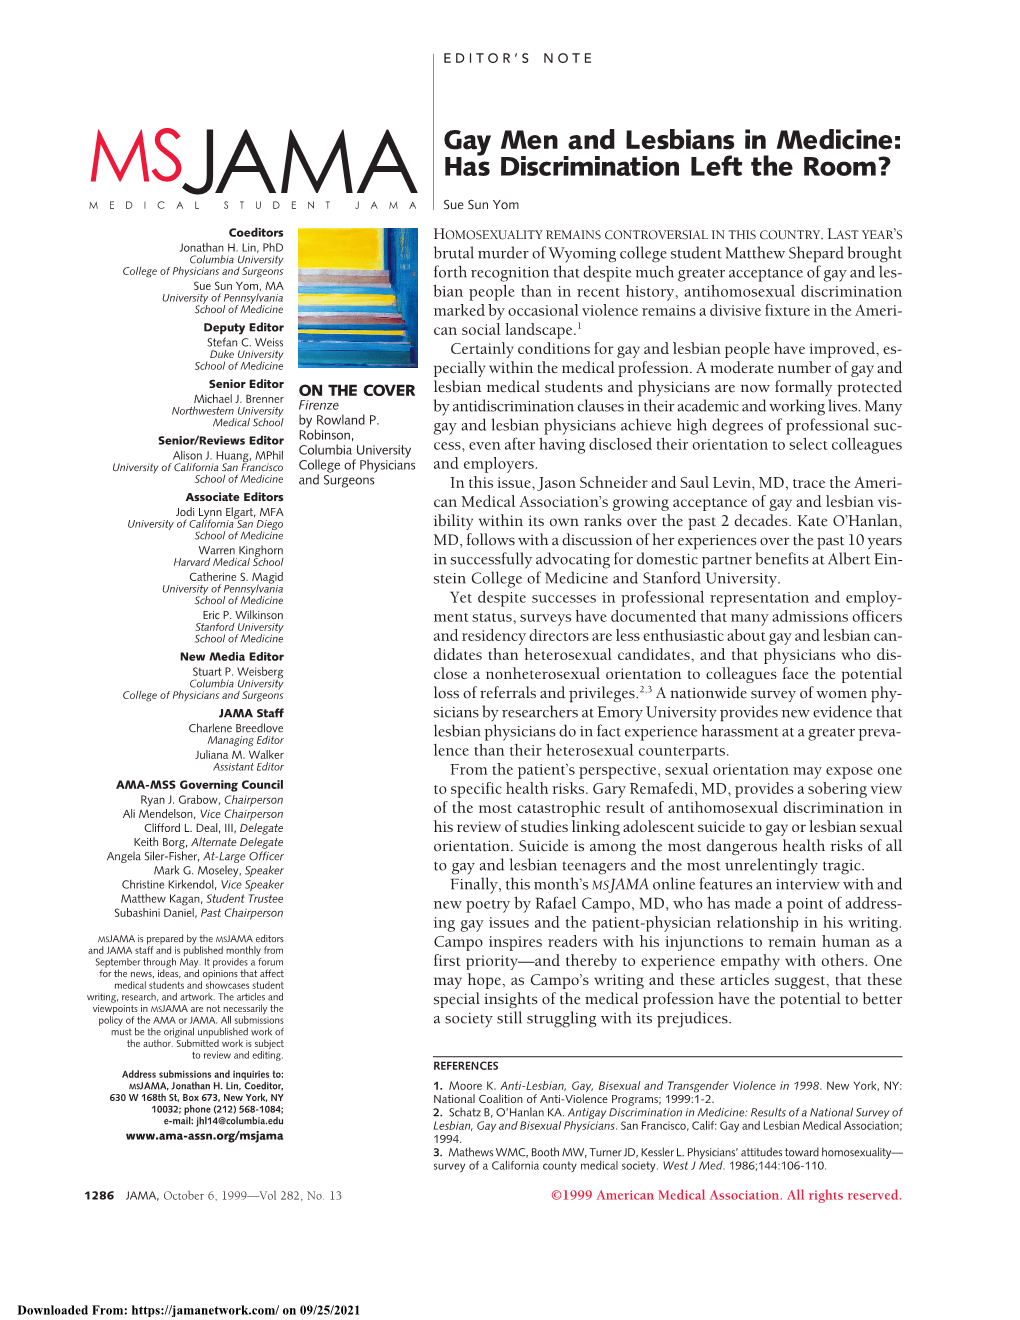 Gay Men and Lesbians in Medicine: Has Discrimination Left the Room?